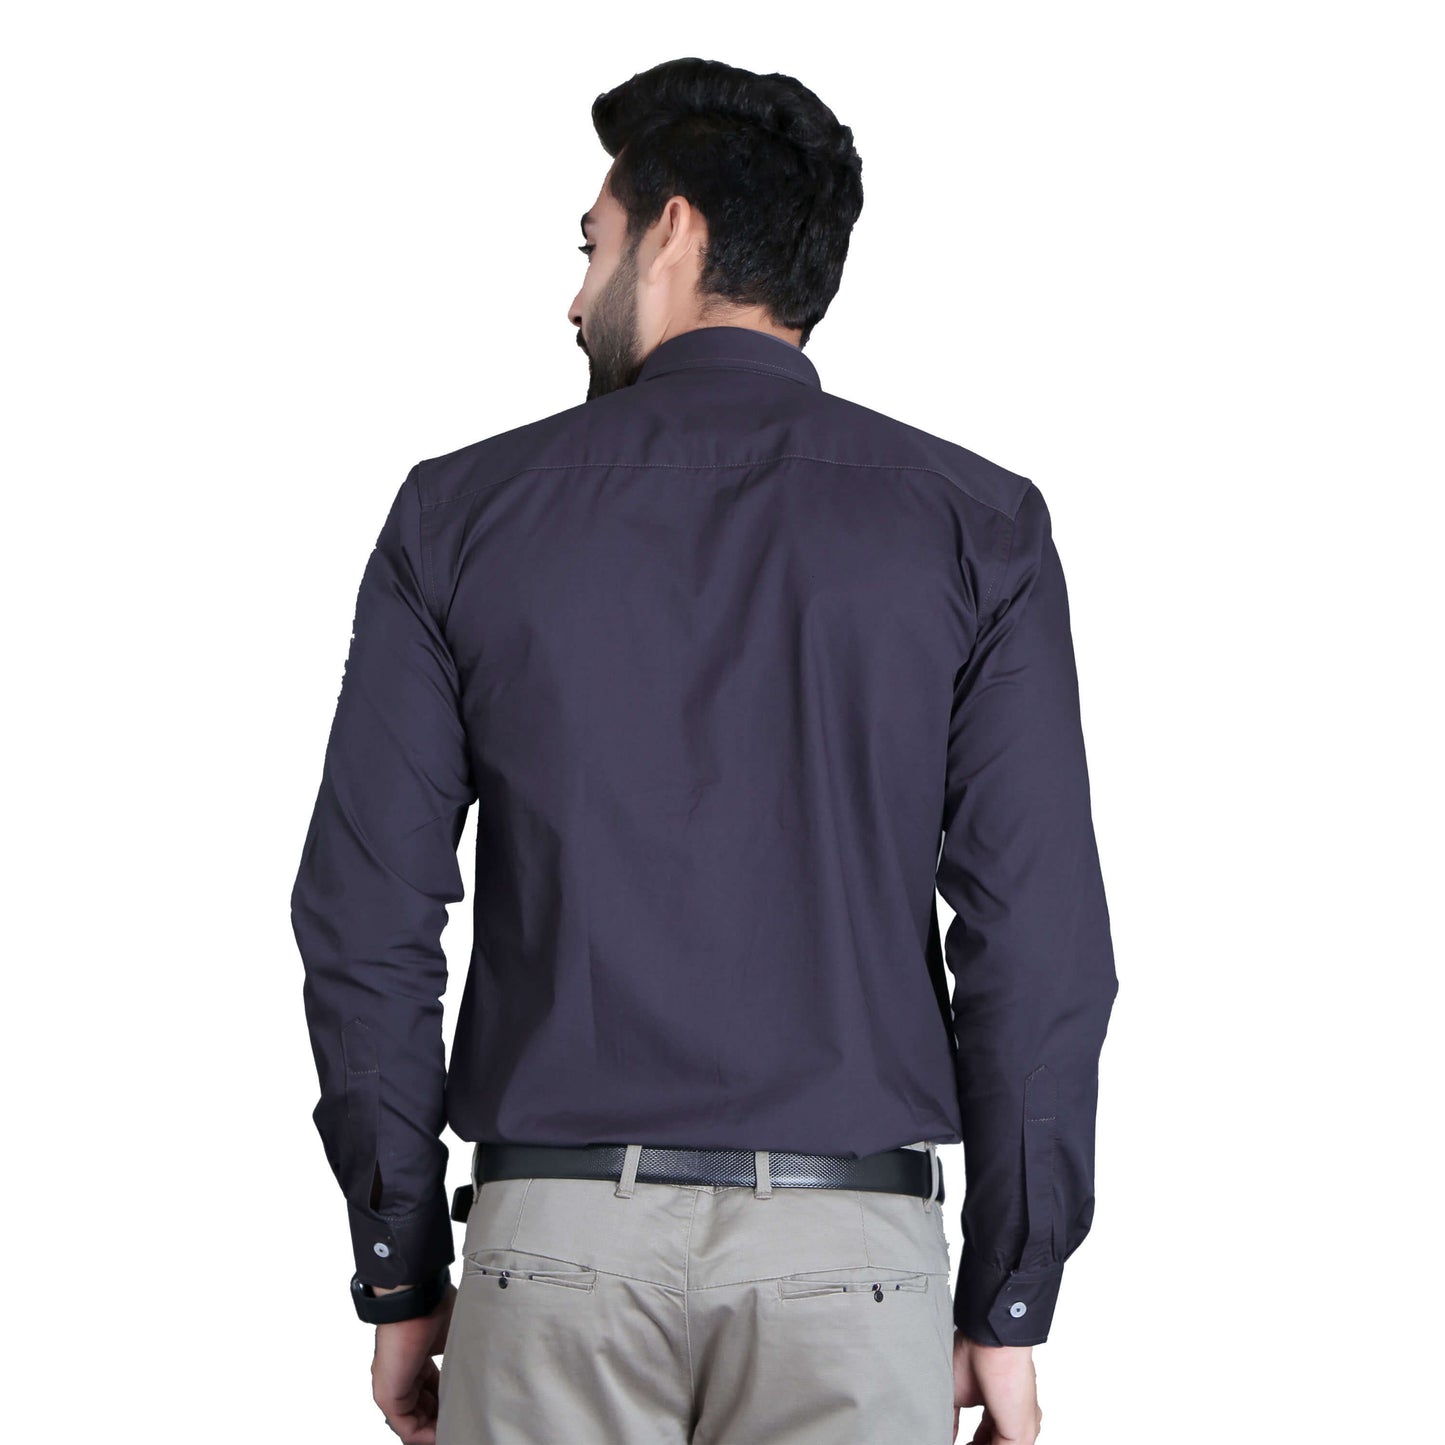 5thanfold Men's Formal Pure Cotton Full Sleeve Solid Dark Grey Slim Fit Shirt